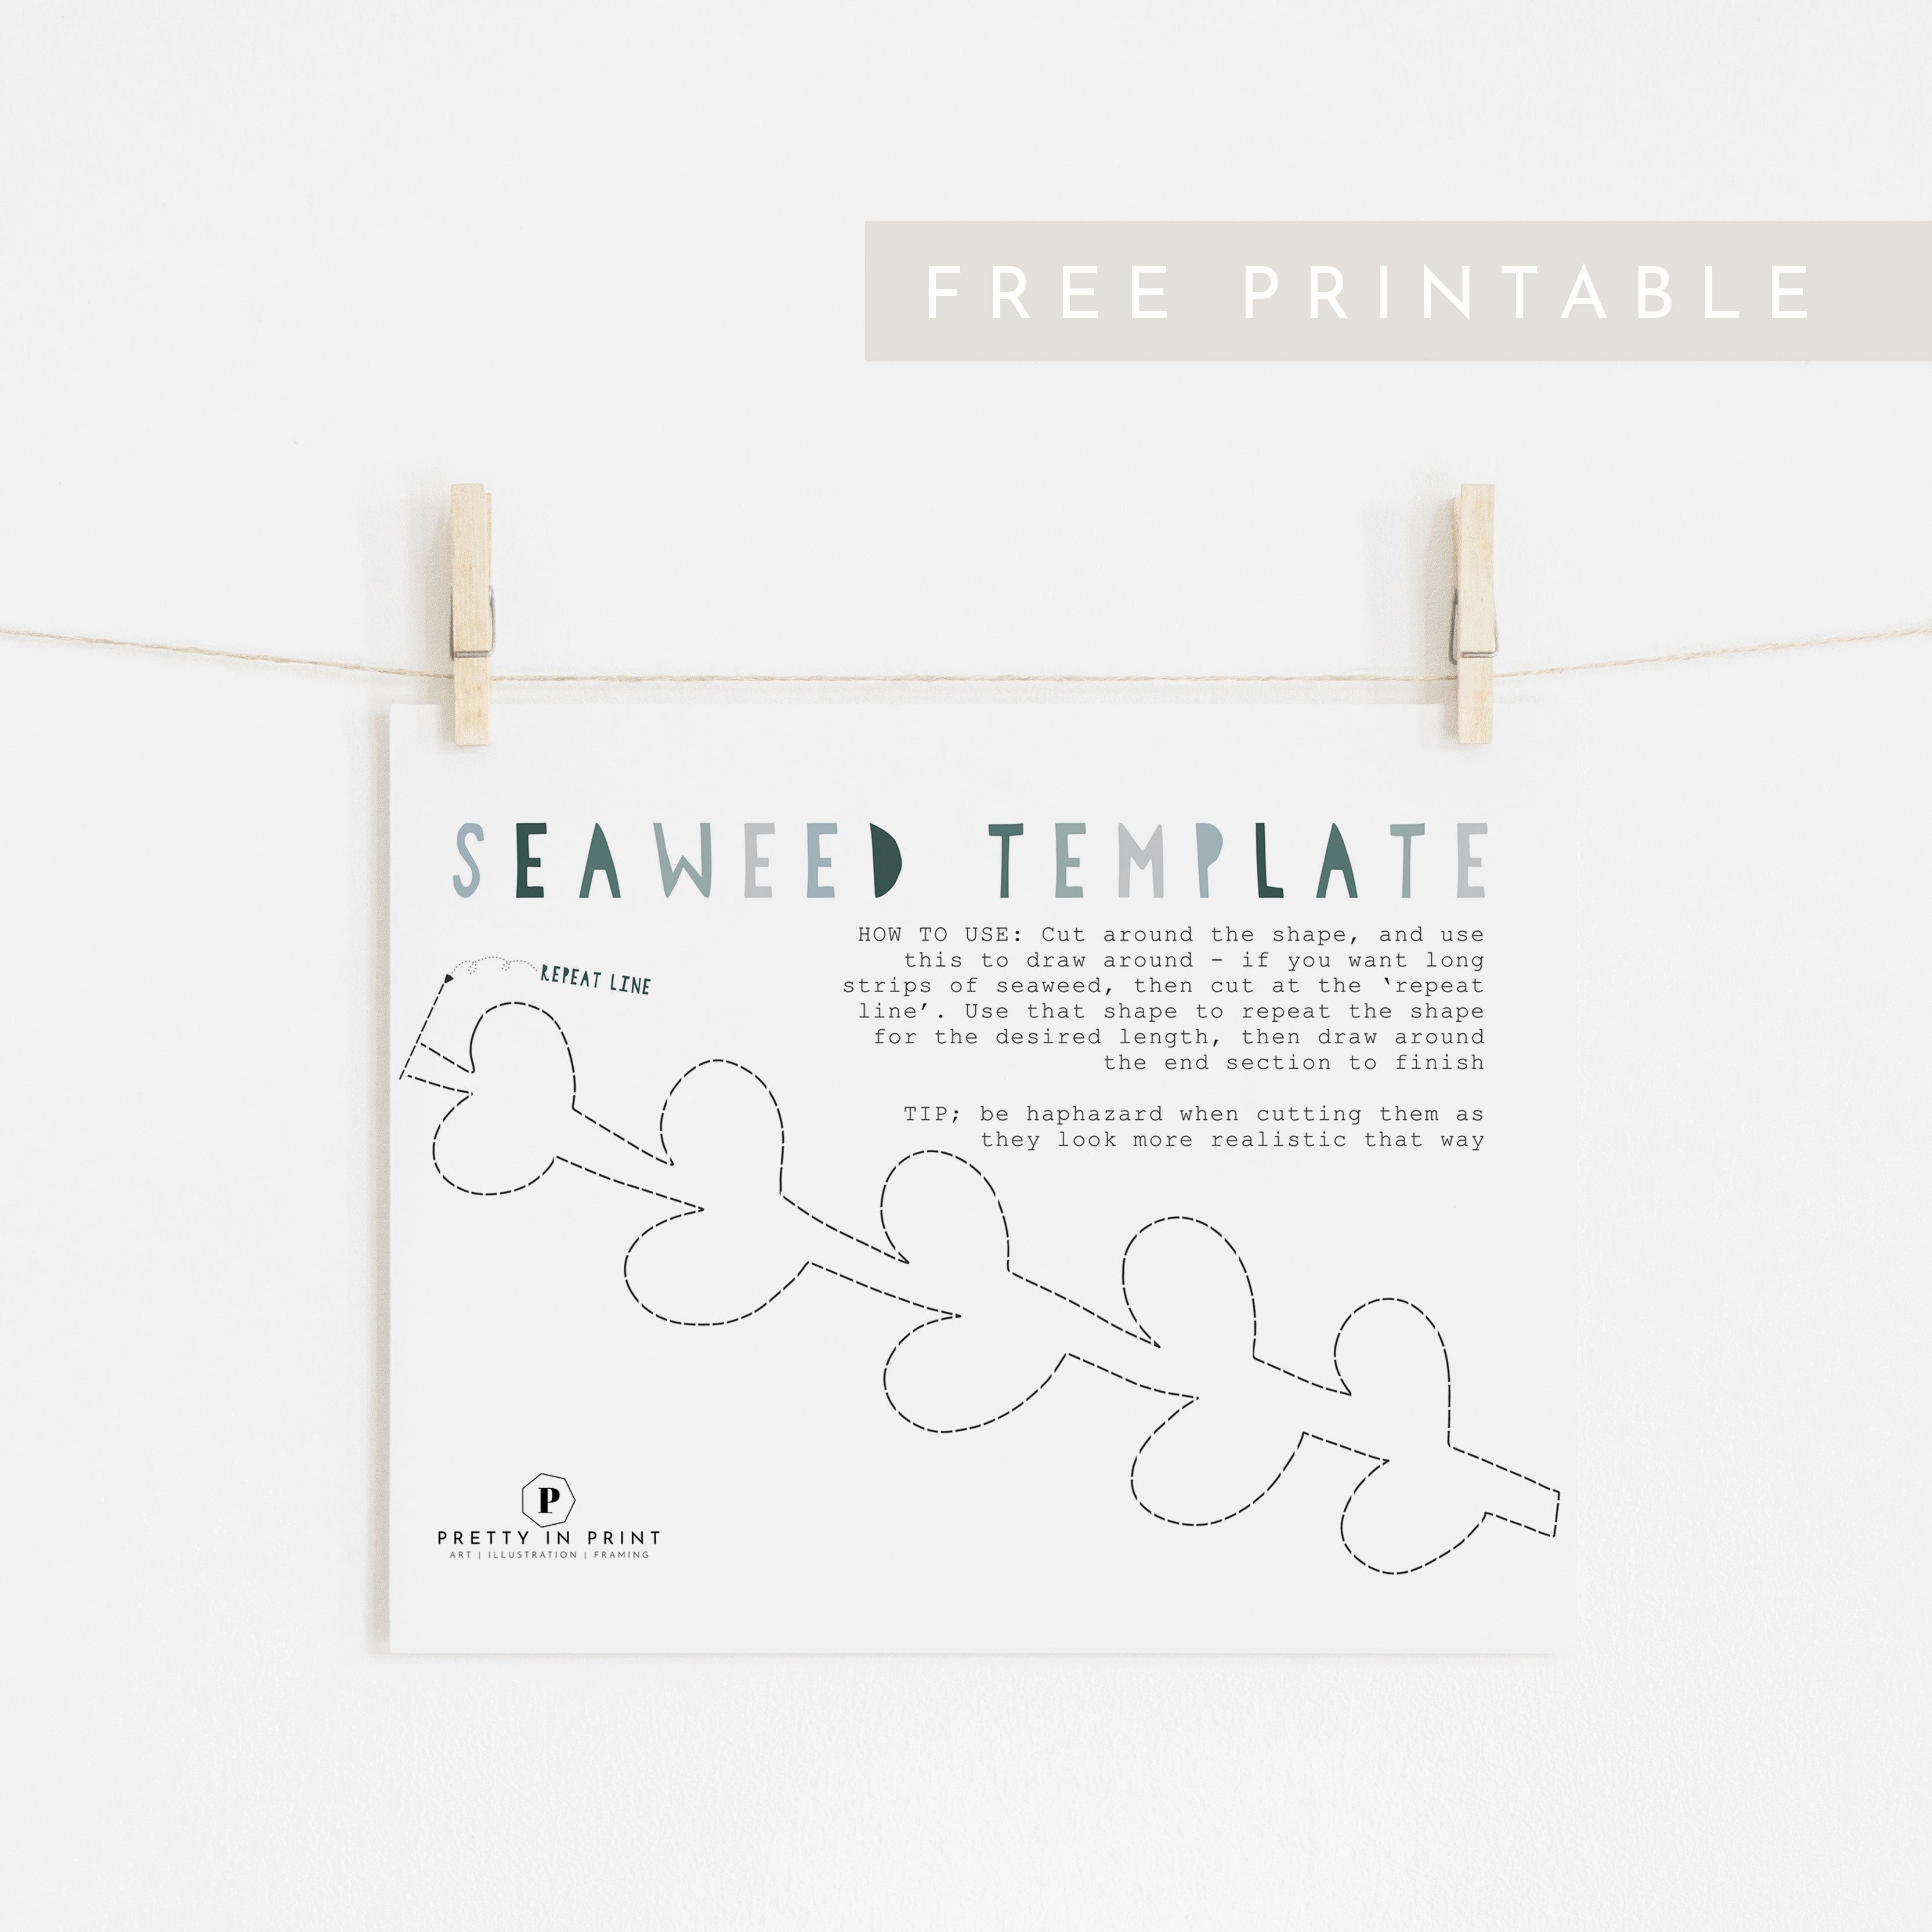 seaweed-template-2-free-printable-pretty-in-print-art-ltd